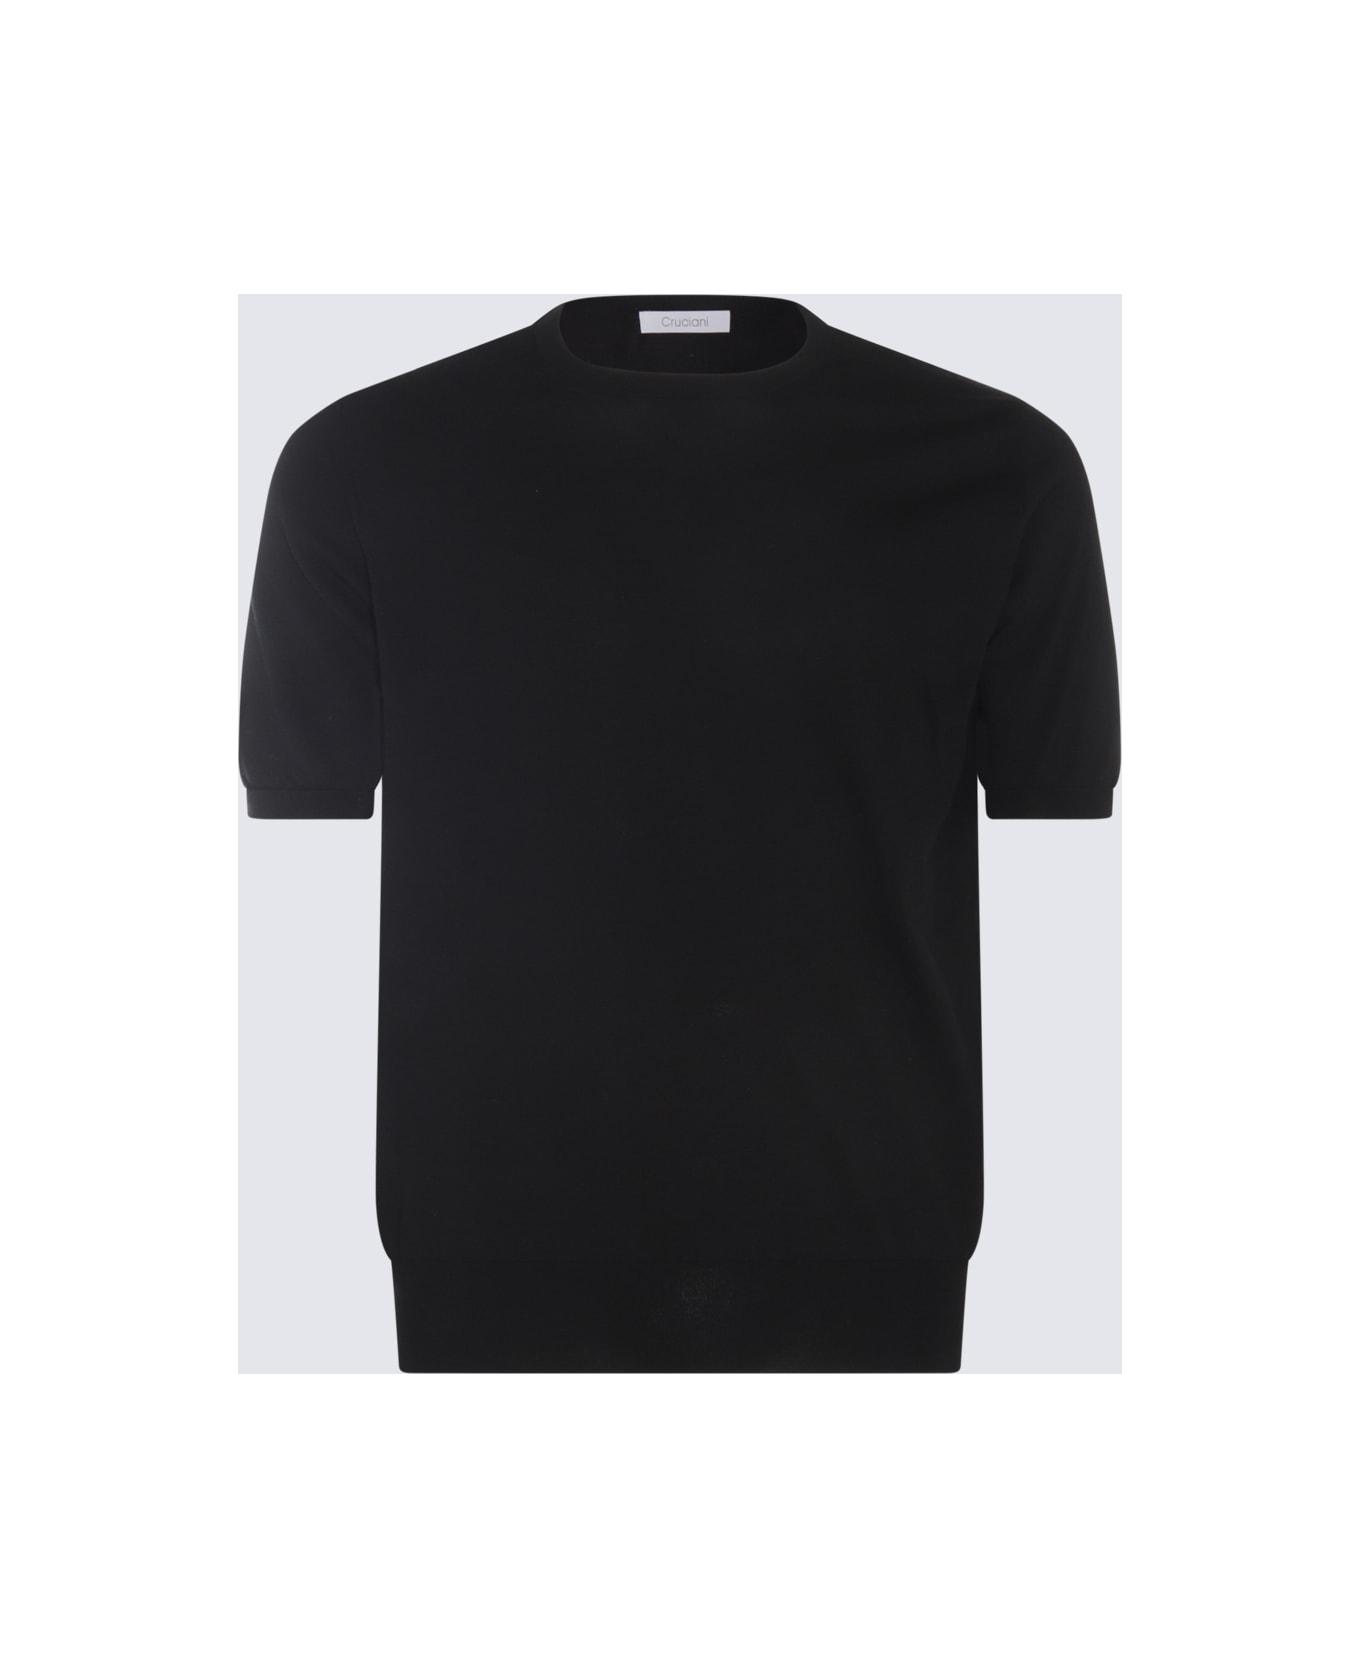 Cruciani Black Cotton T-shirt - Black